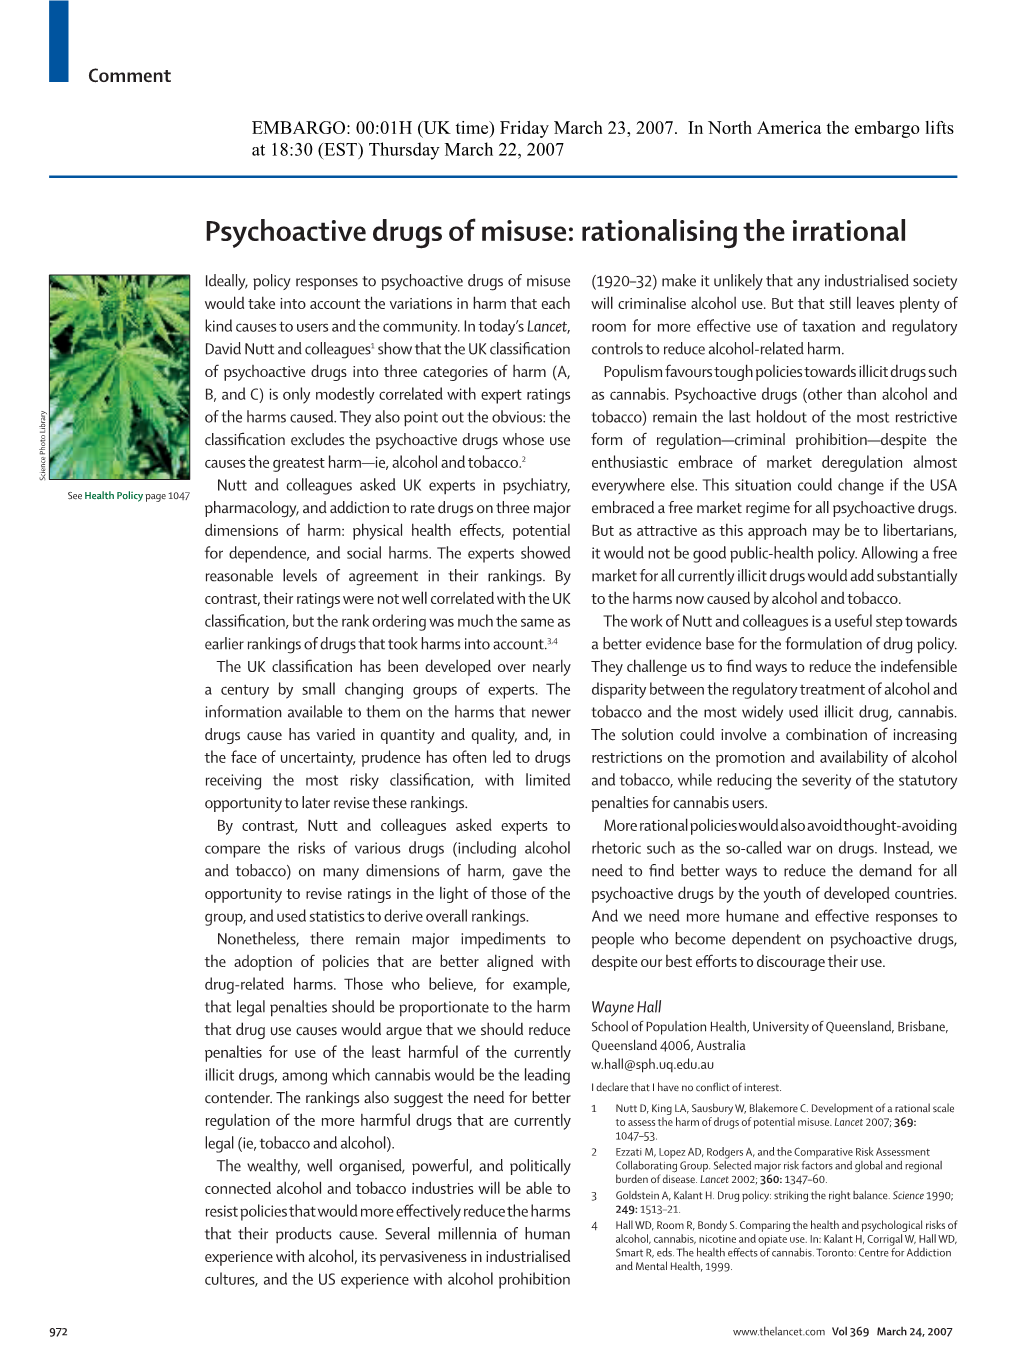 Psychoactive Drugs of Misuse: Rationalising the Irrational